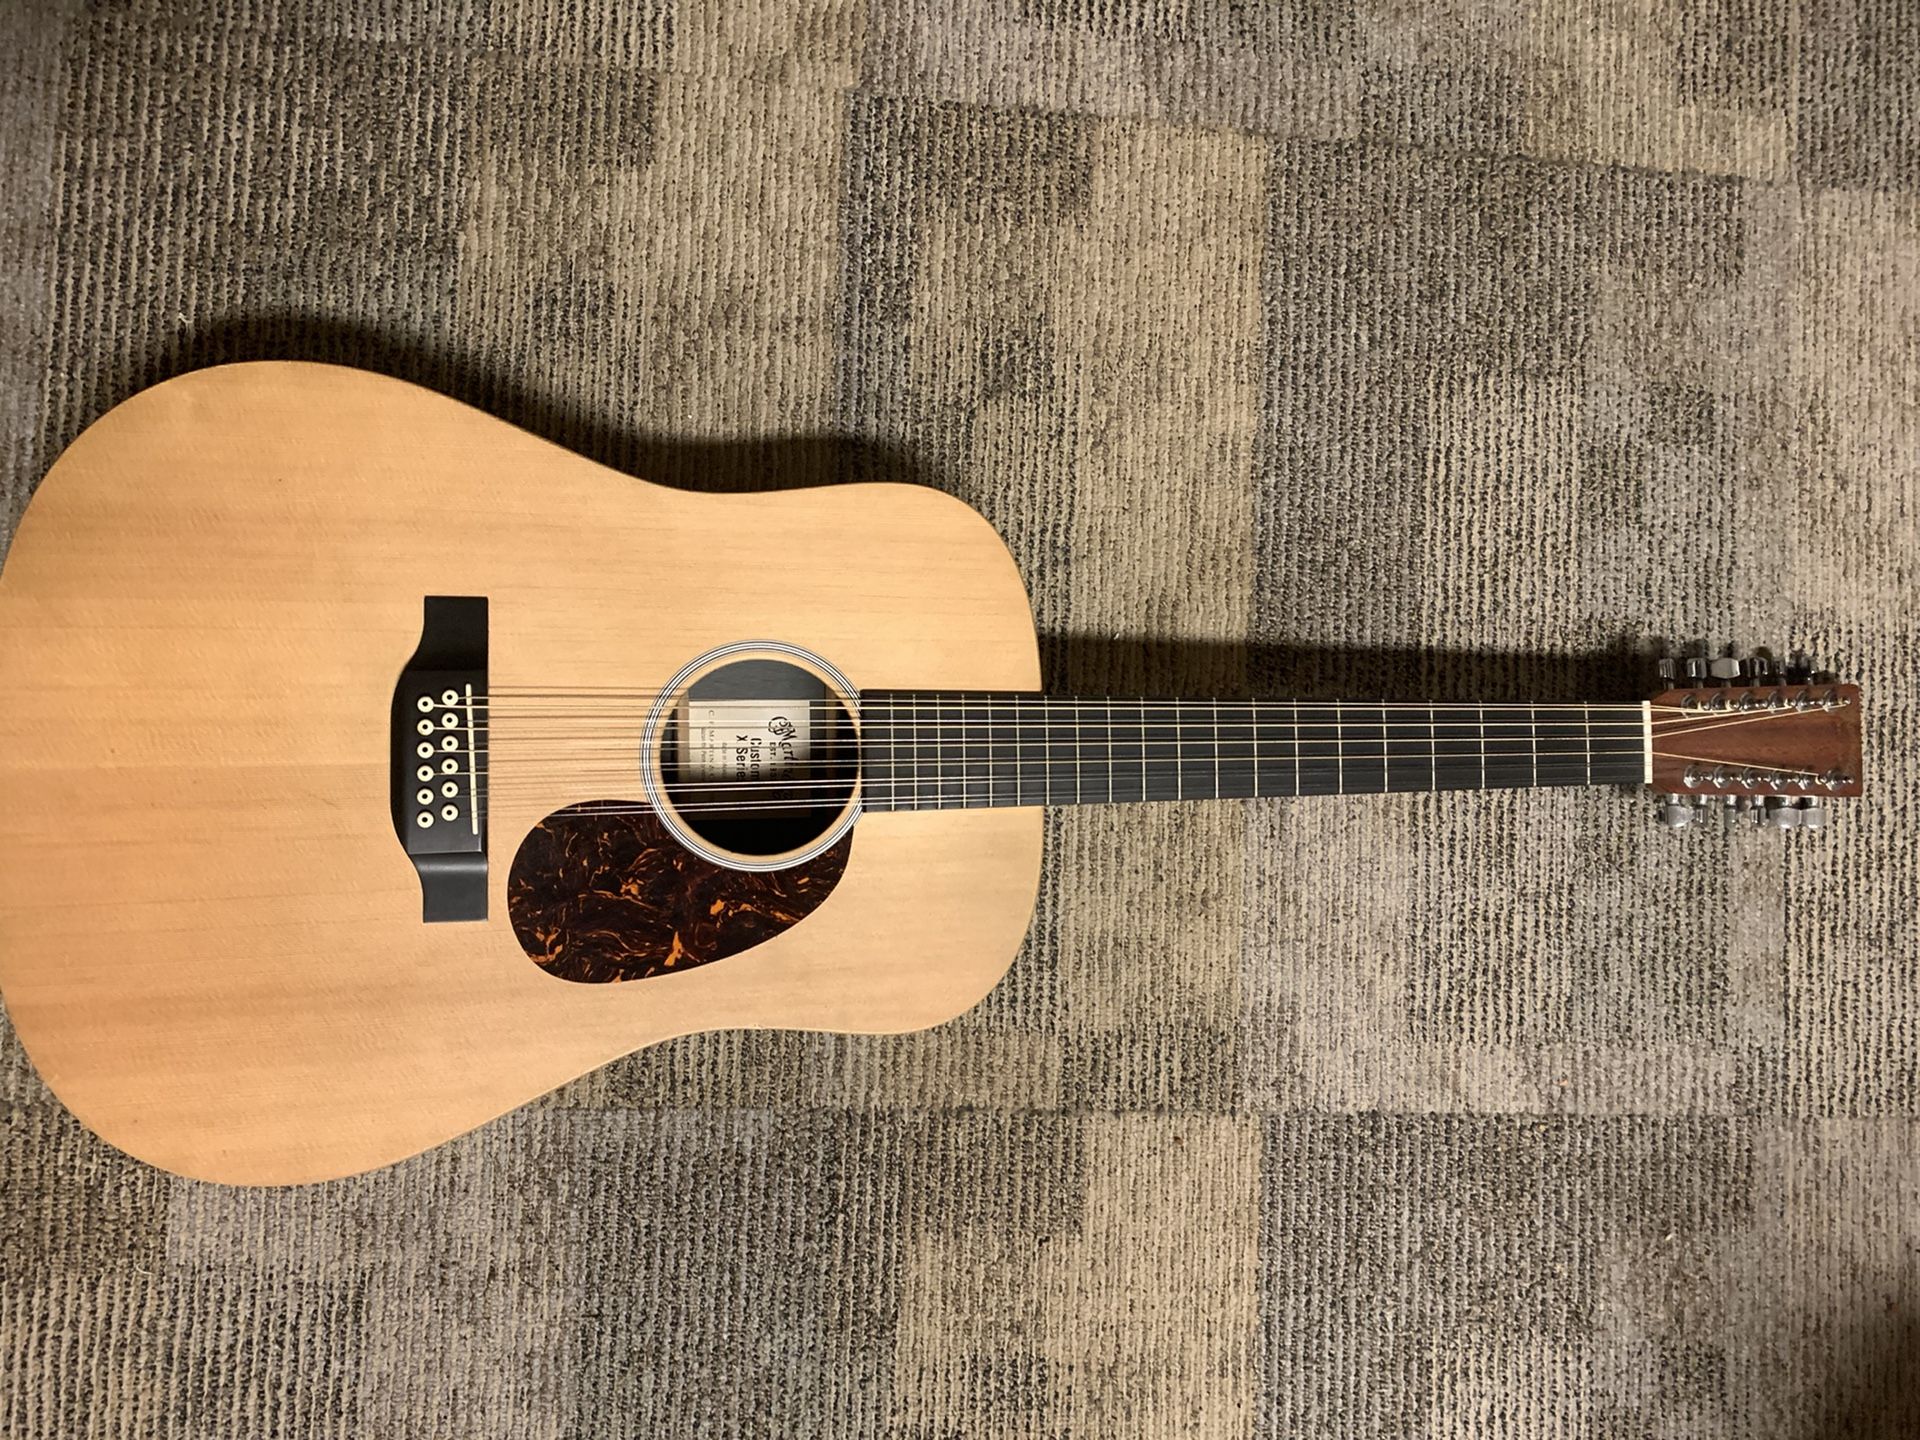 Martin 12 string guitar